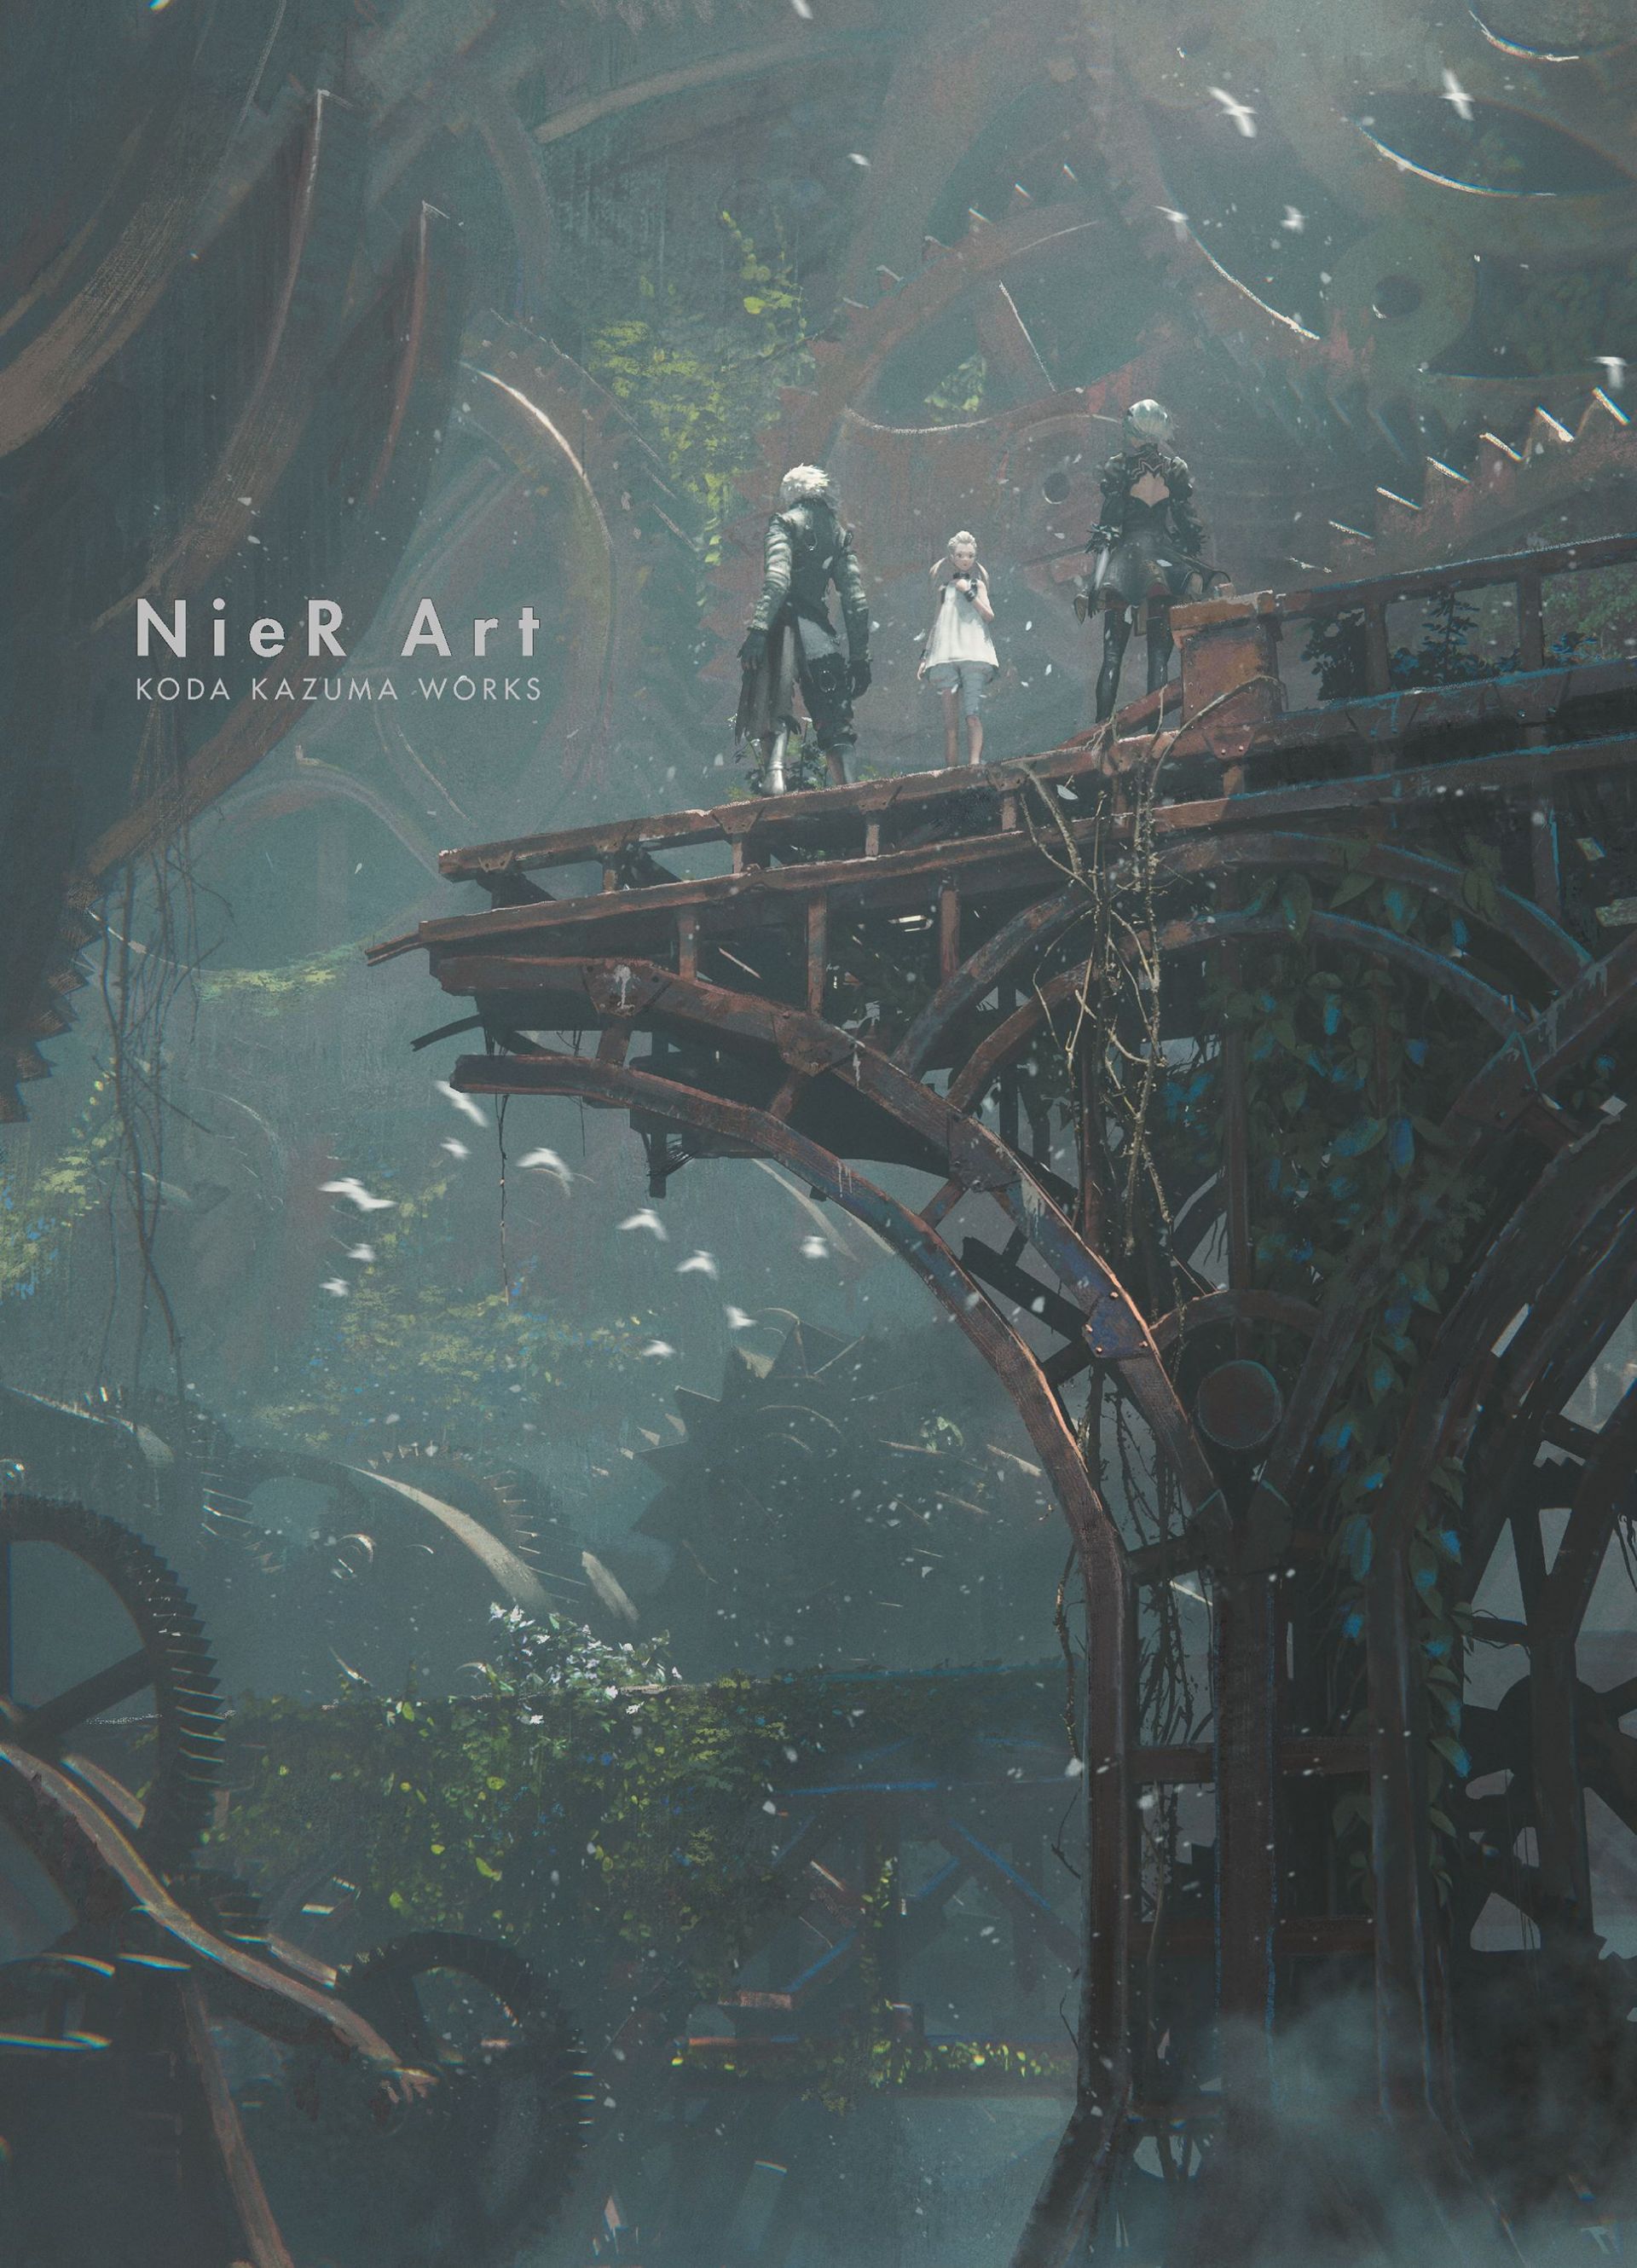 NieR Art – Koda Kazuma Works [ARTBOOK] | Square Enix Store